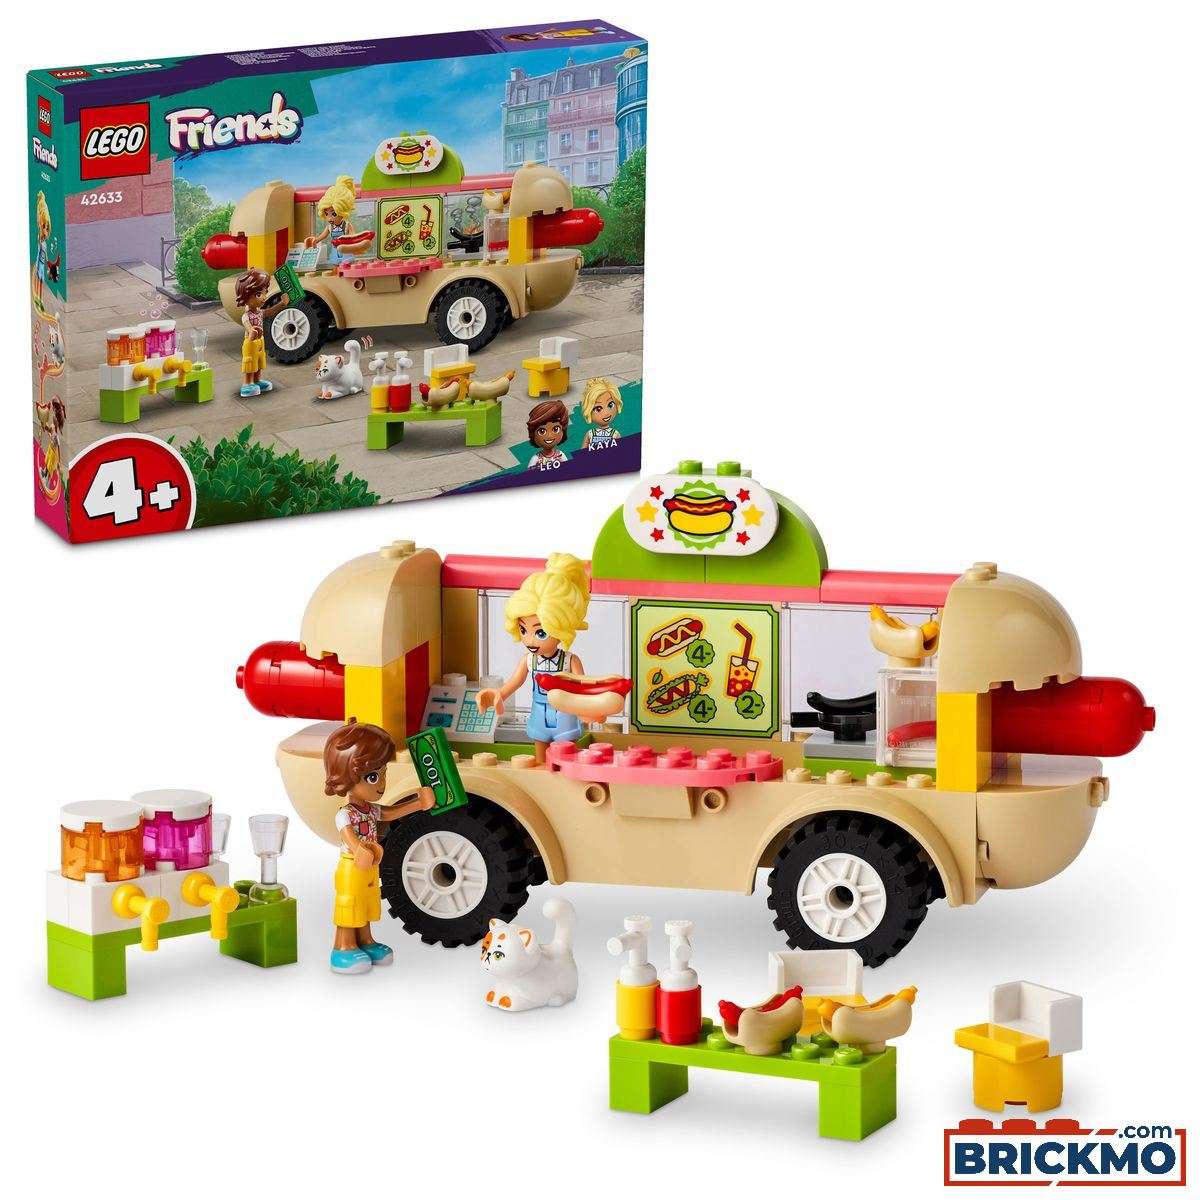 LEGO Friends 42633 Food Truck hot-dog 42633